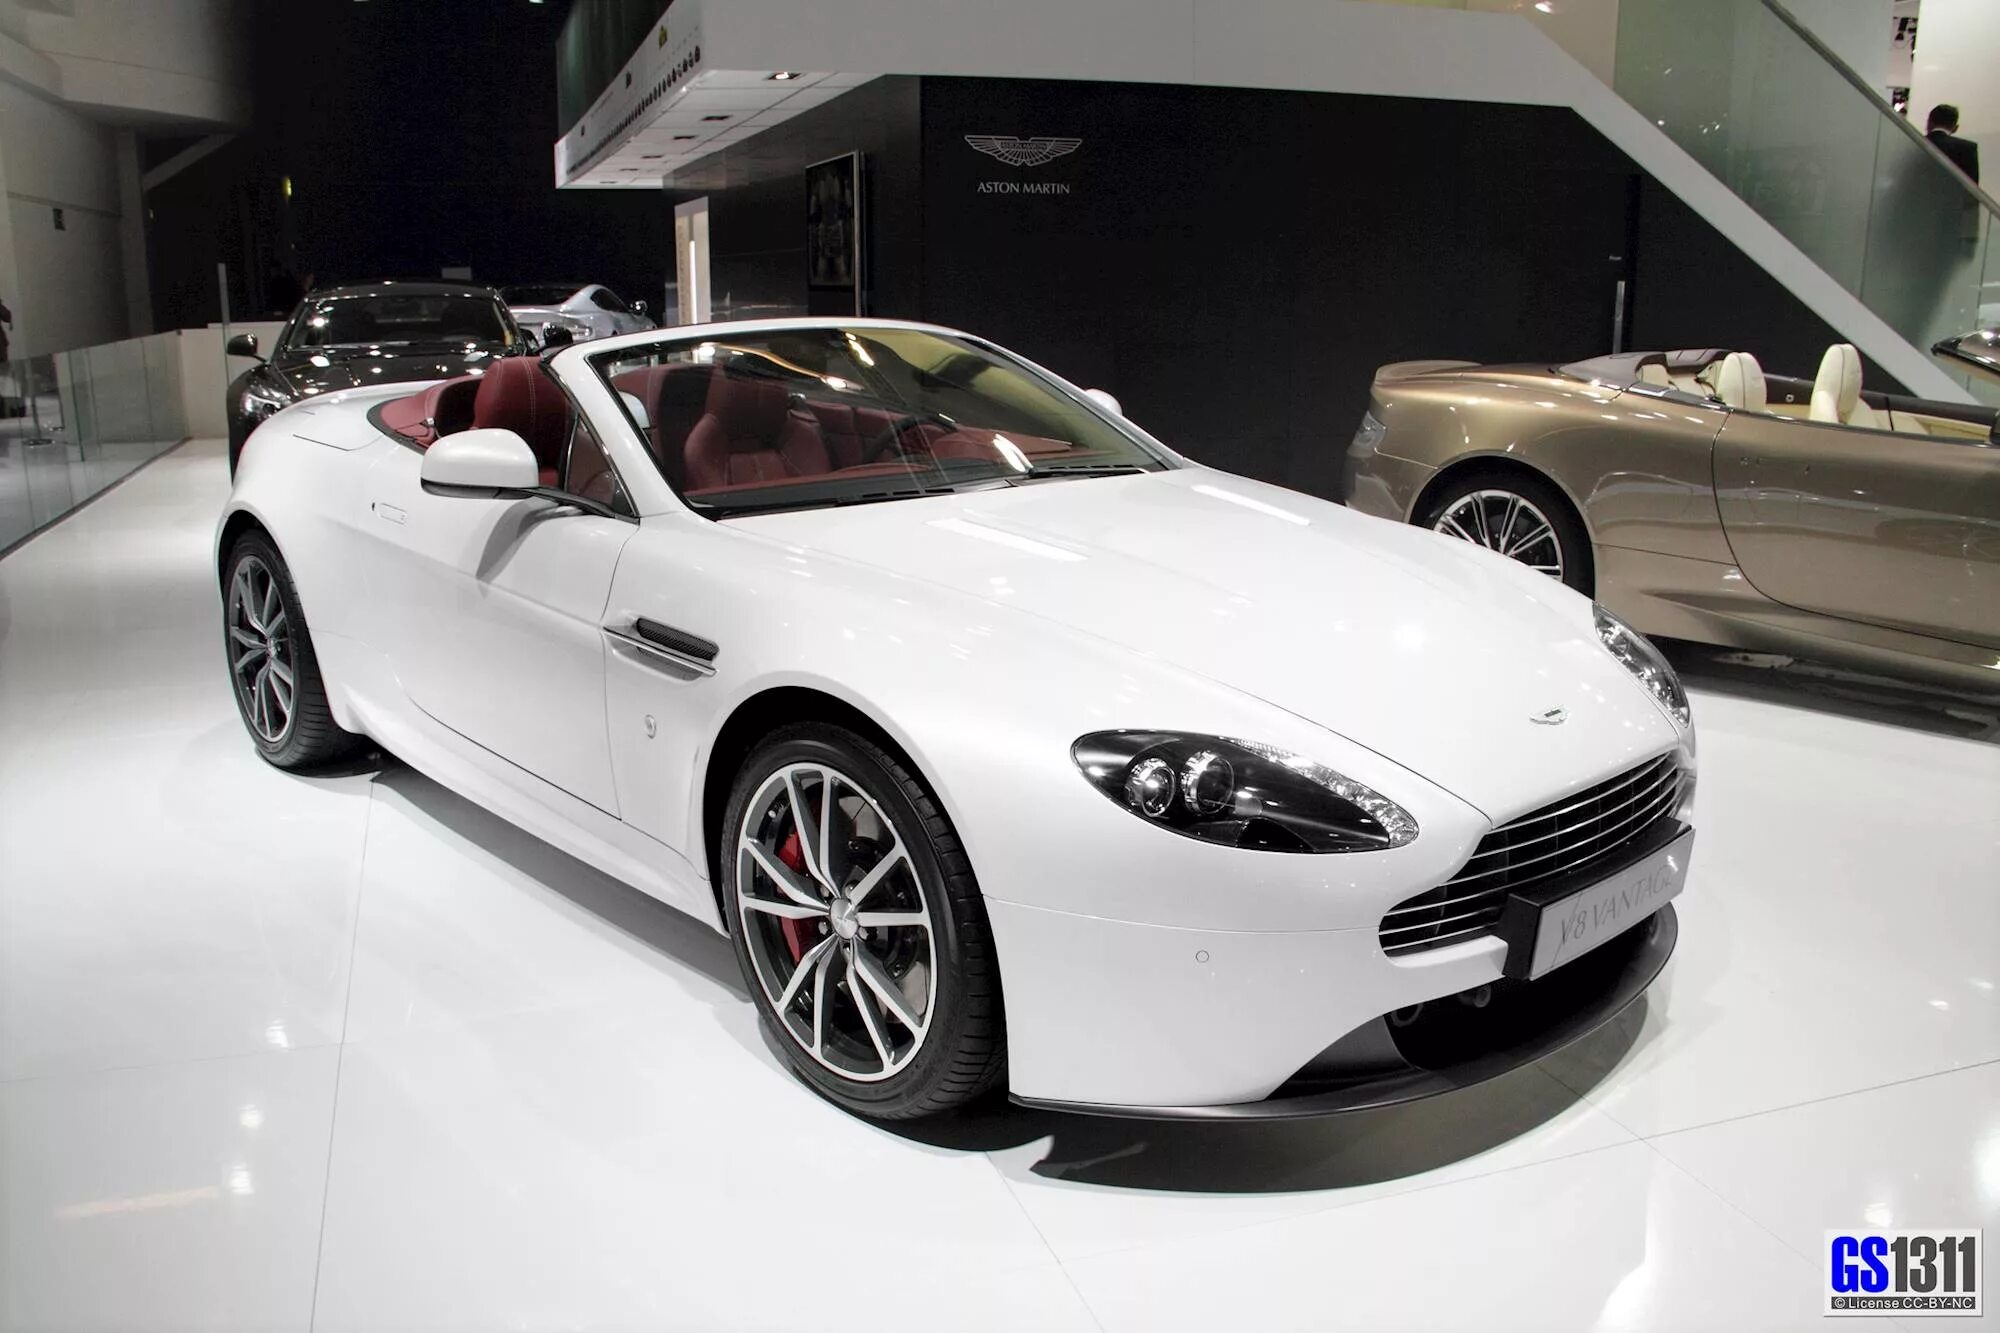 2006 Aston Martin v8 Vantage White. Машины за 4 миллиона. Машина за миллион рублей.